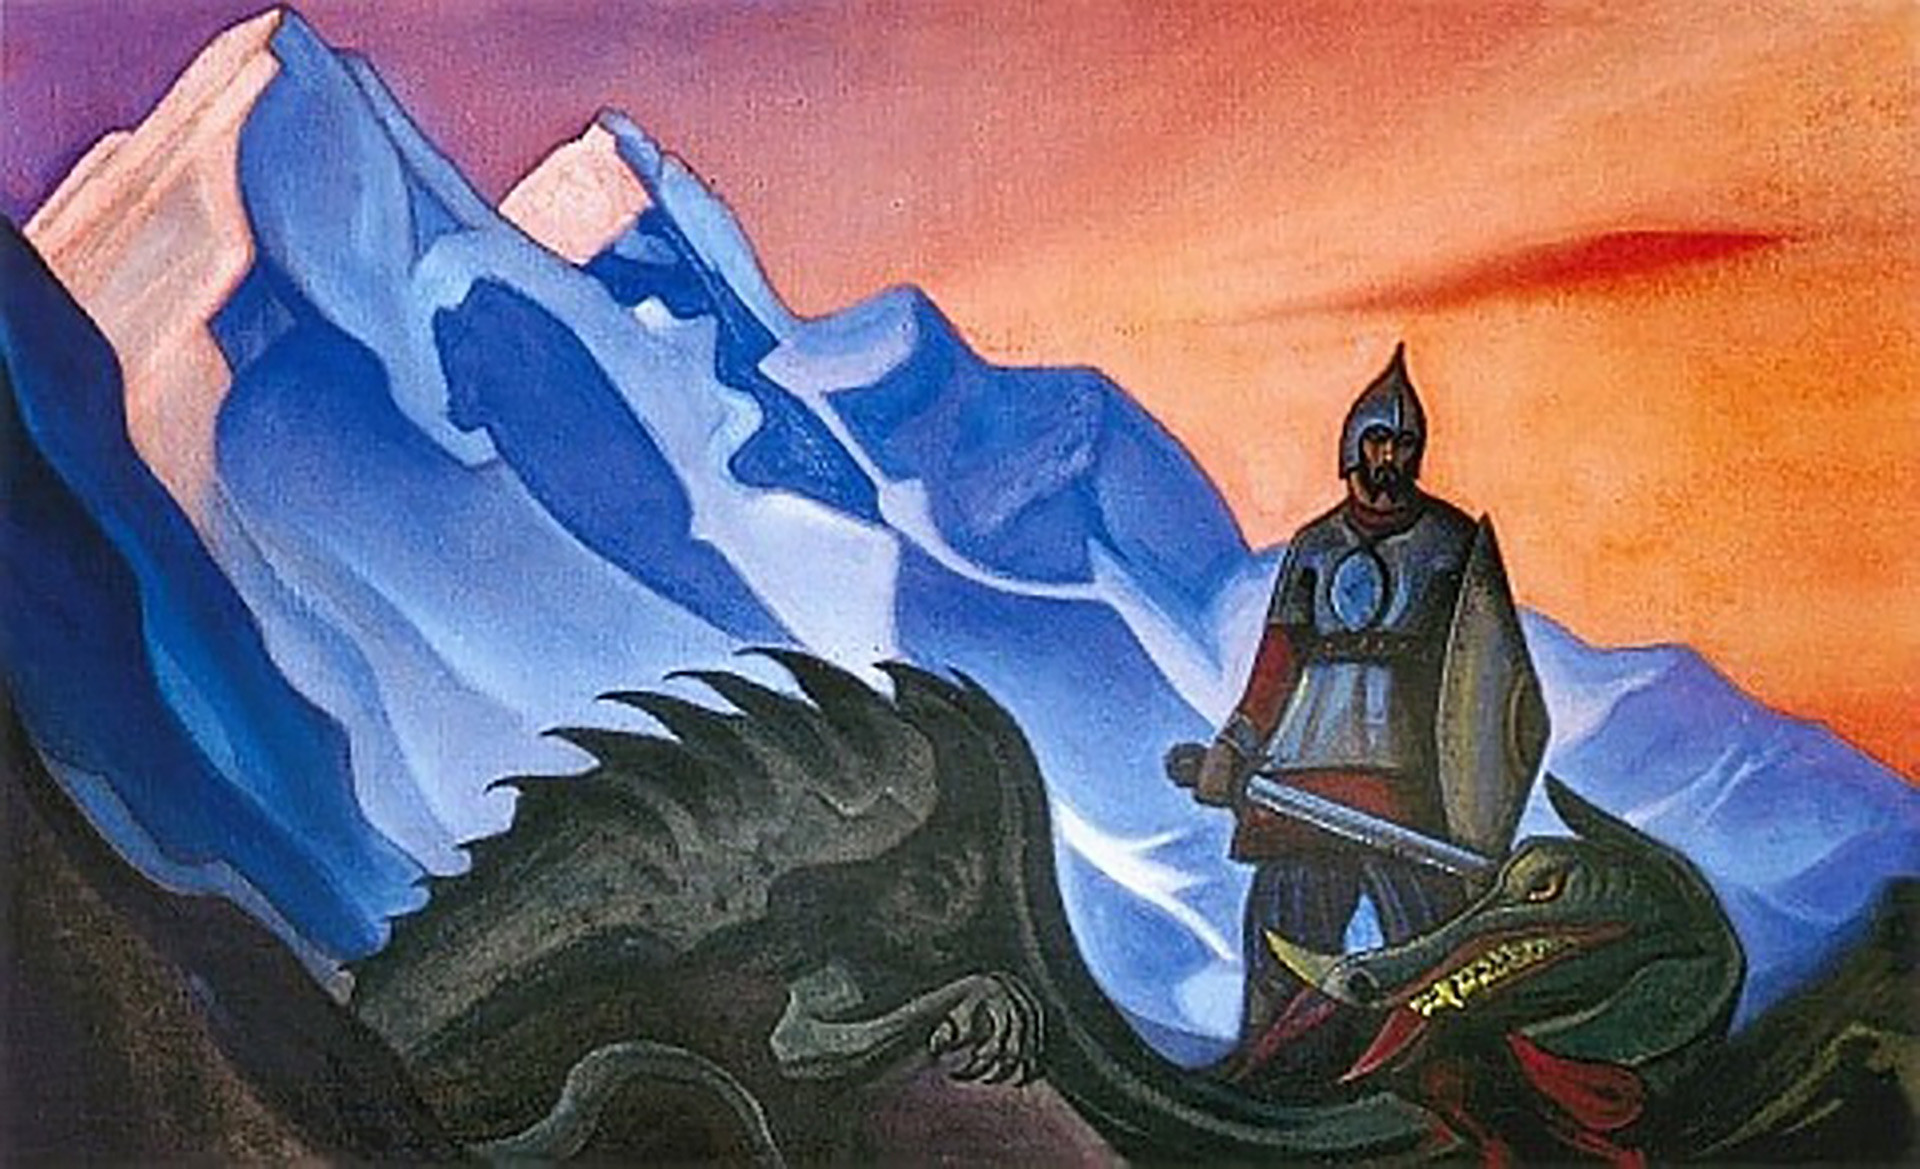 Nicholas Roerich. “A vitória”.